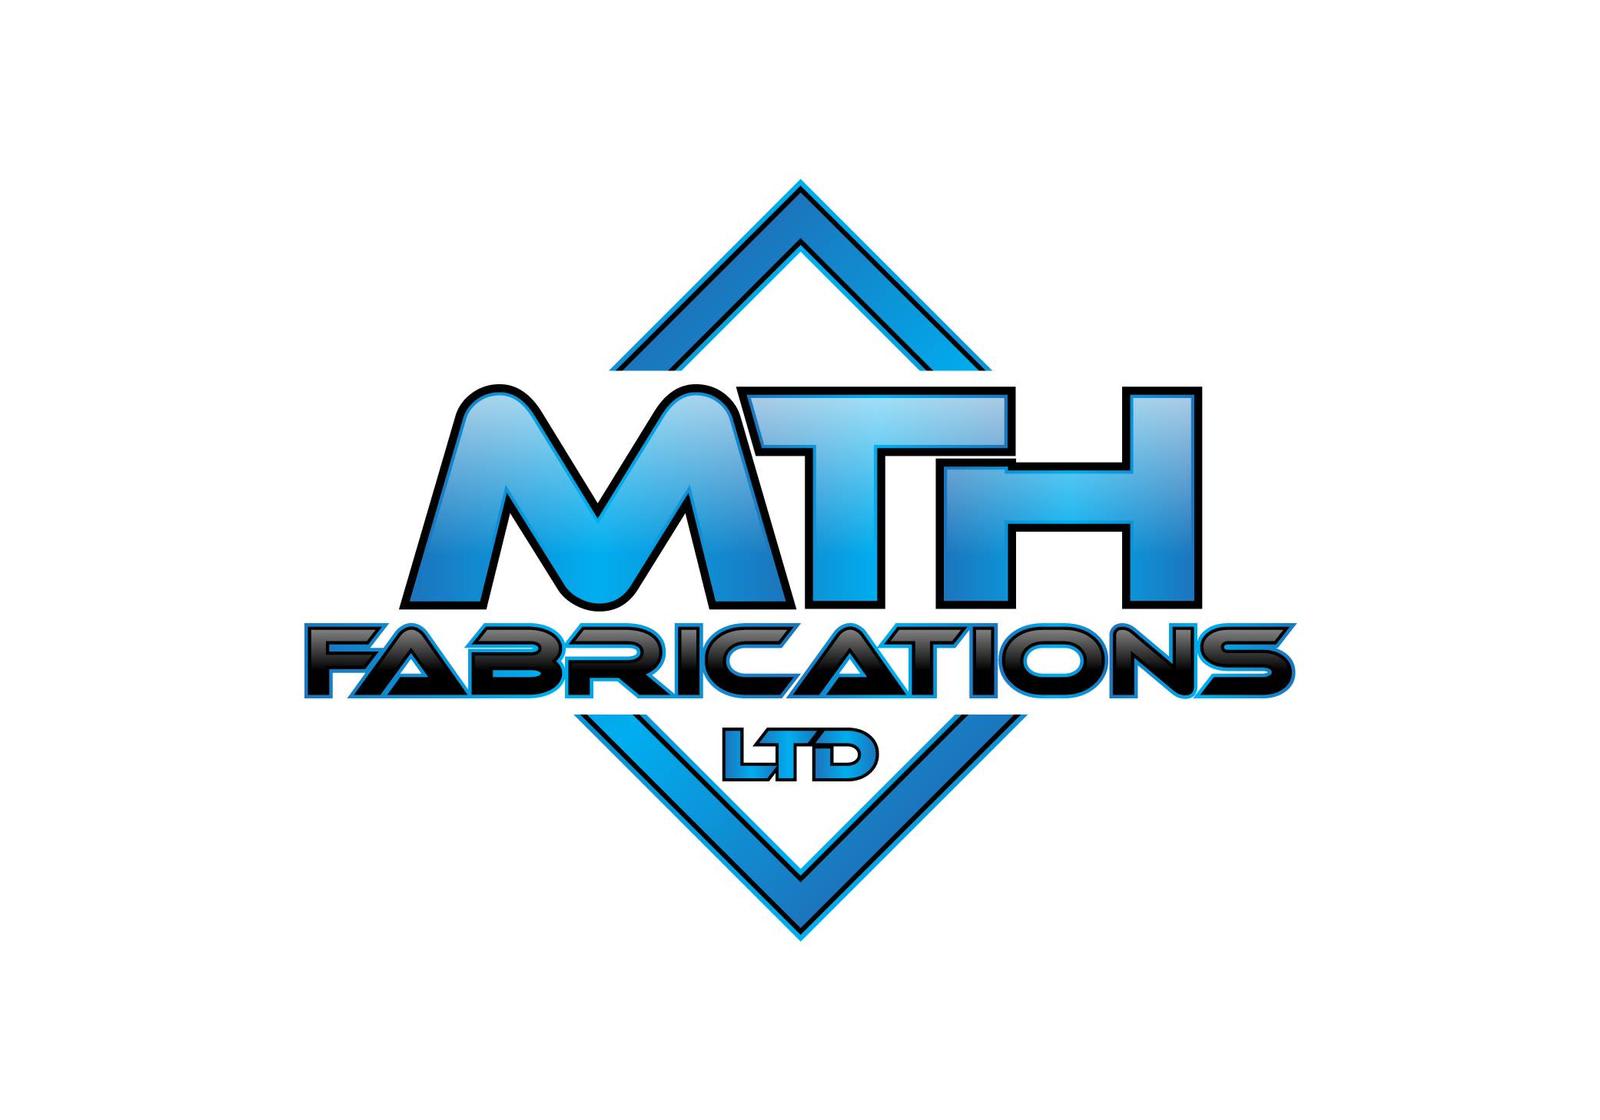 MTH Fabrications ltd